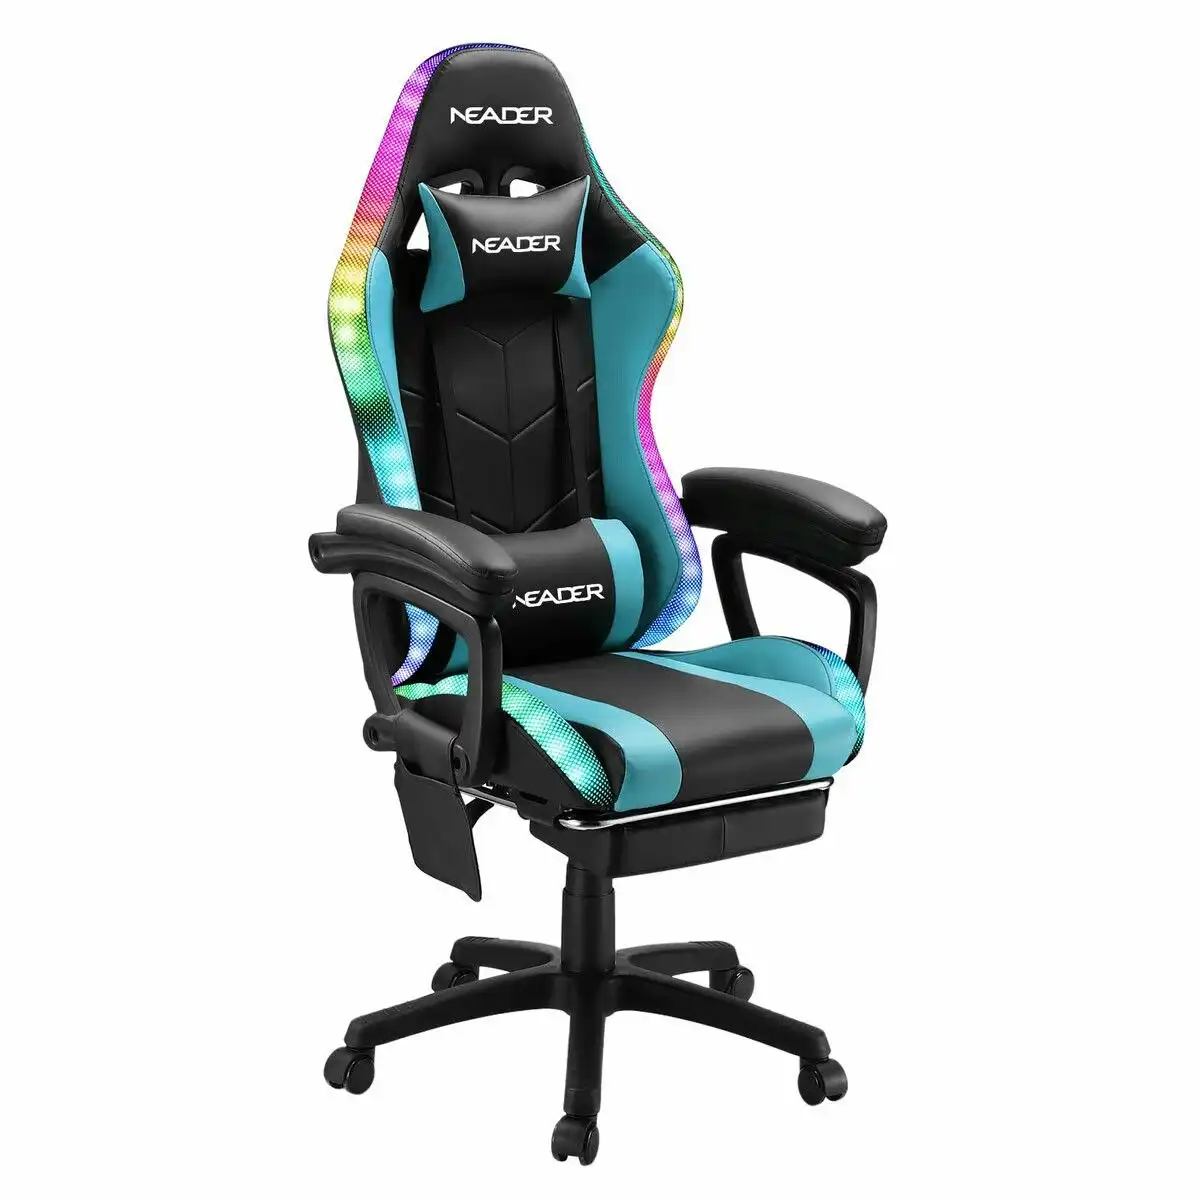 Neader Massage Gaming Chair RGB LED Home Office Computer Racing Desk Executive Armchair High Back Headrest Footrest Lumbar Pillow Seat PU Blue